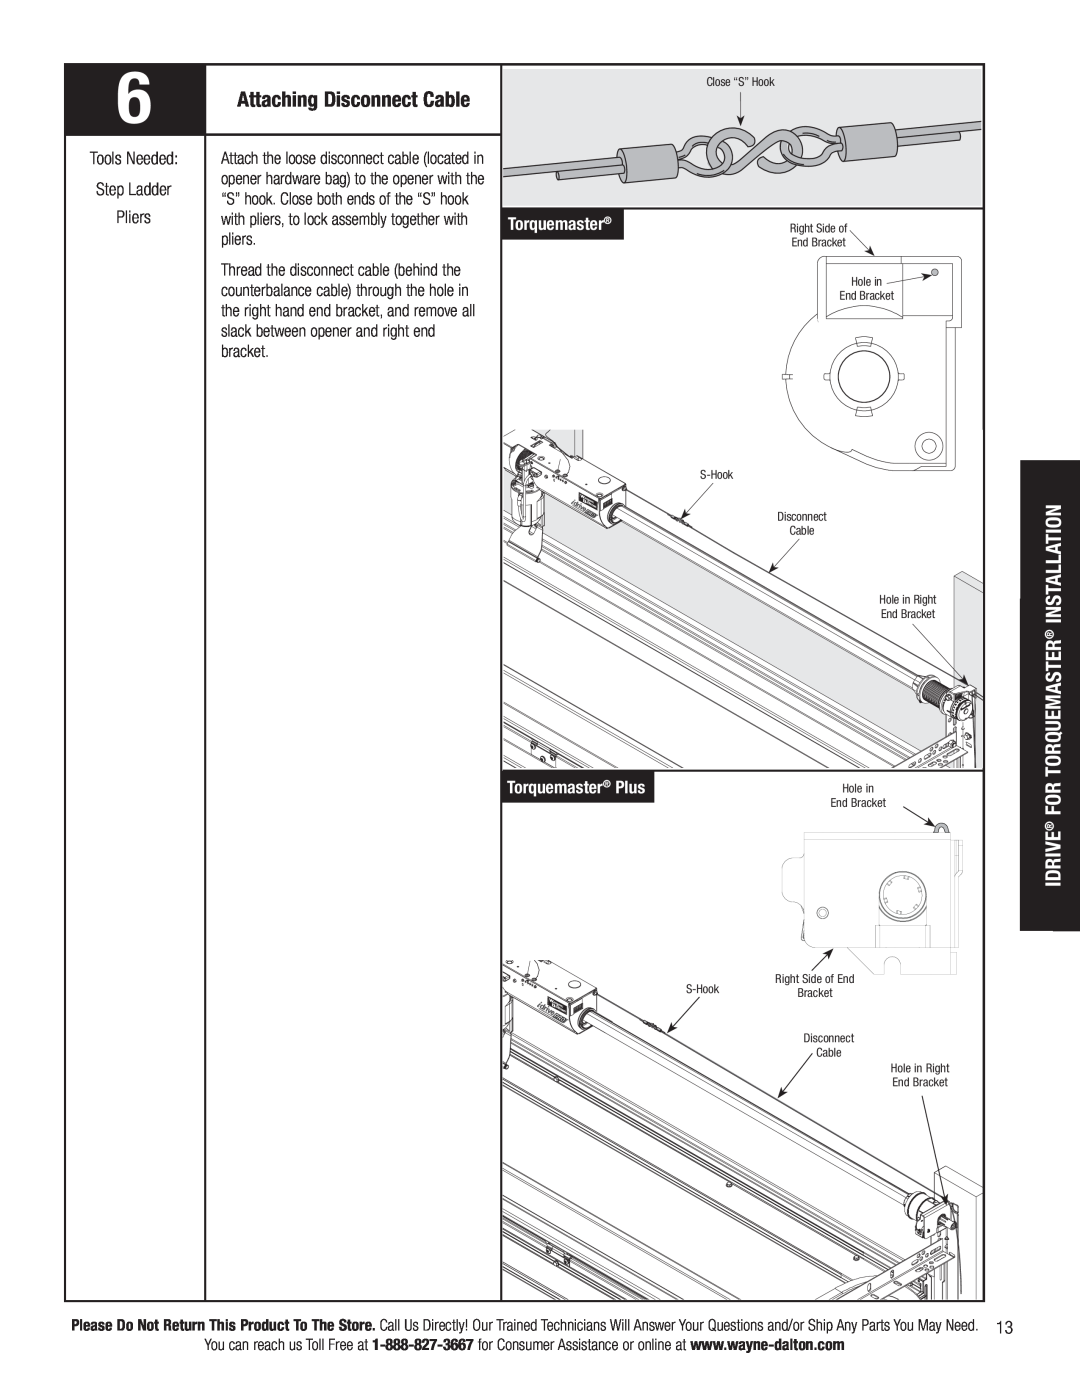 Wayne-Dalton 3790-Z installation instructions 6Attaching Disconnect Cable, pliers, bracket, Torquemaster Plus 